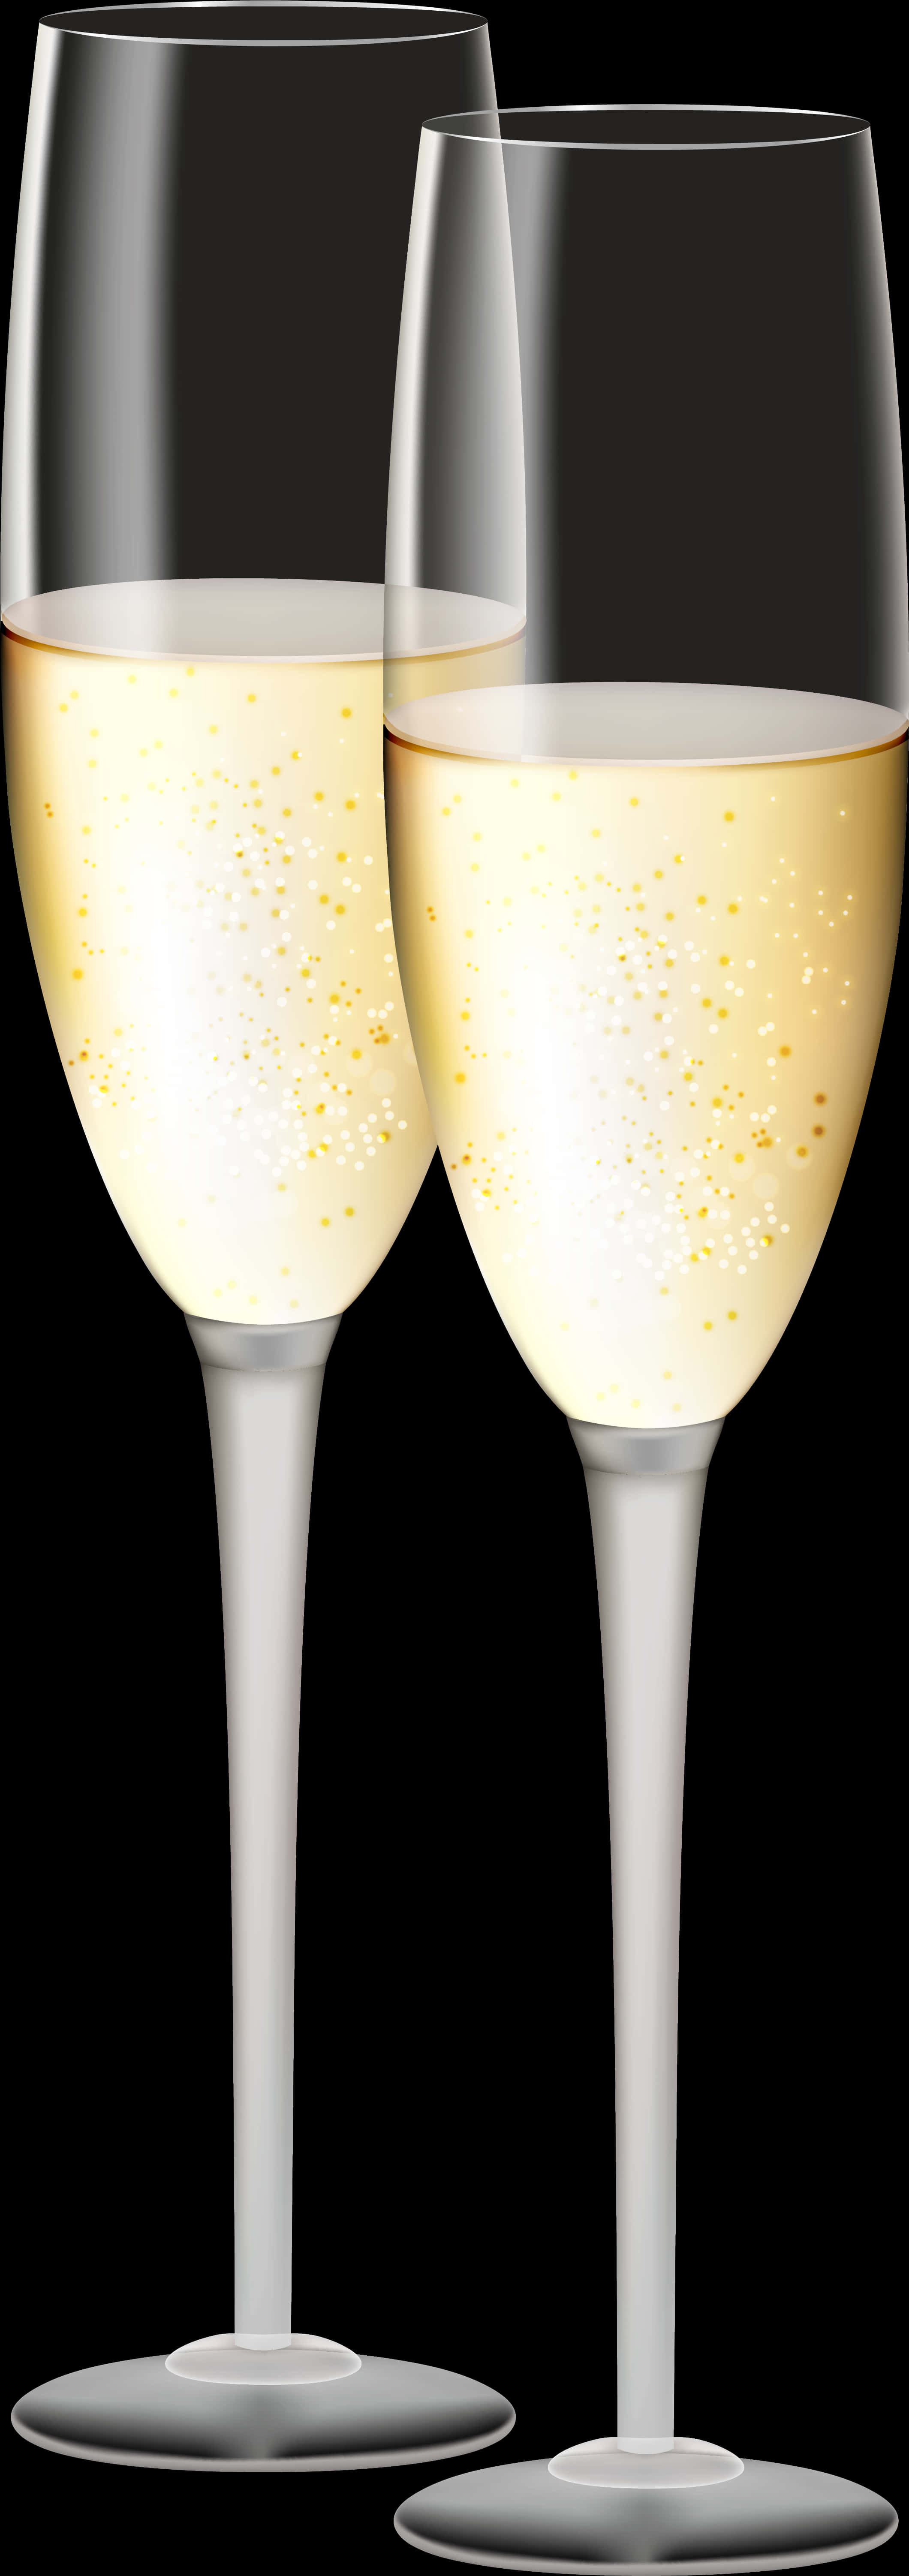 Champagne Glasses Celebration